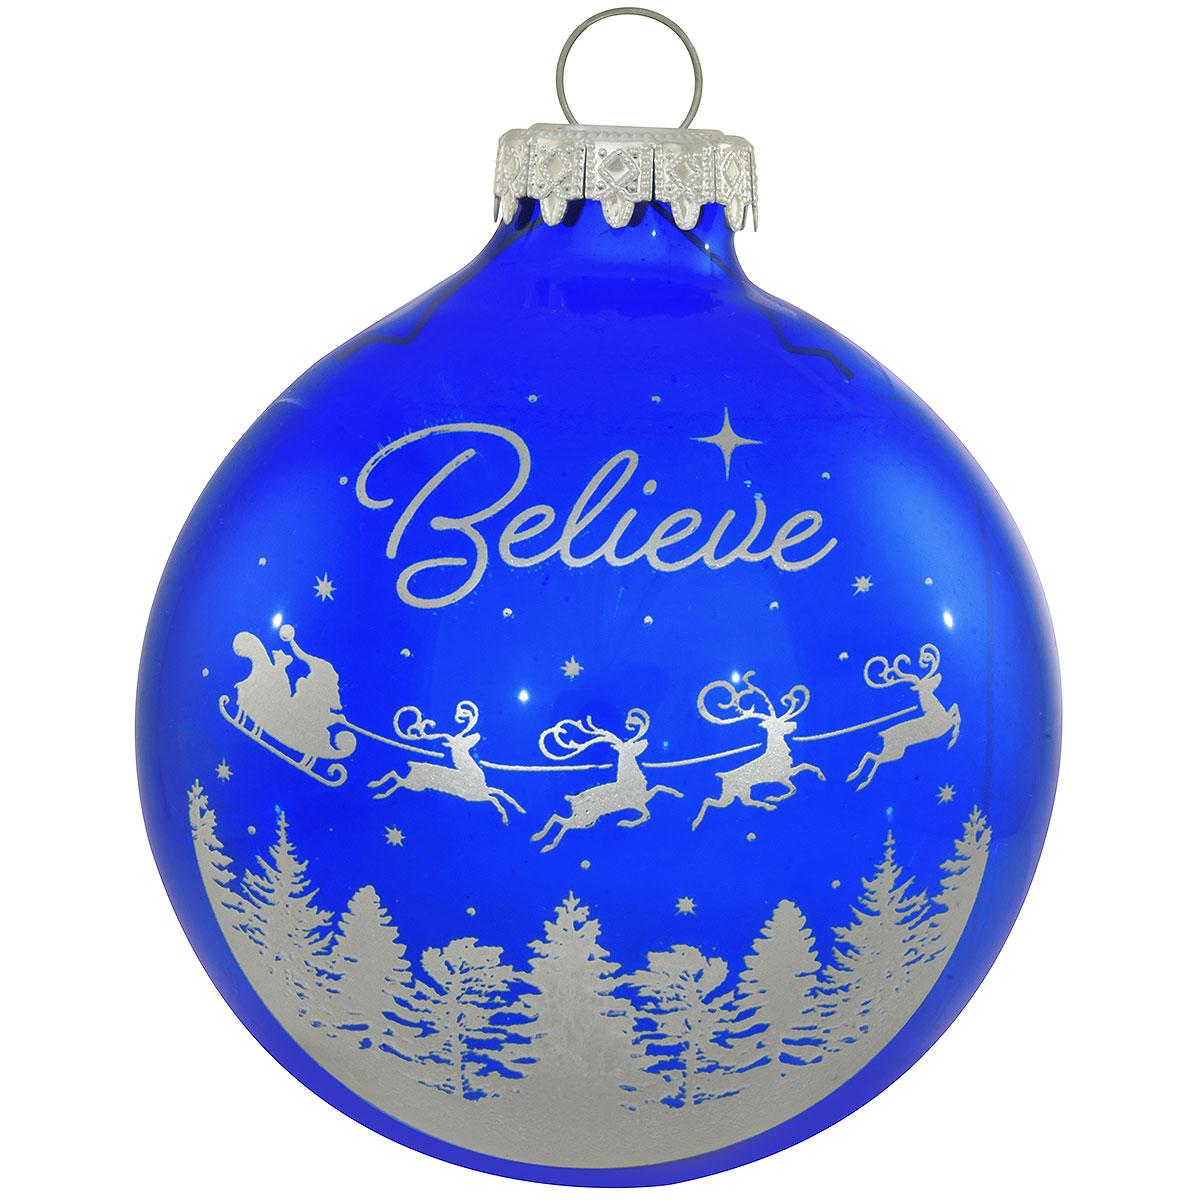 Believe Santa Sleigh Ornament